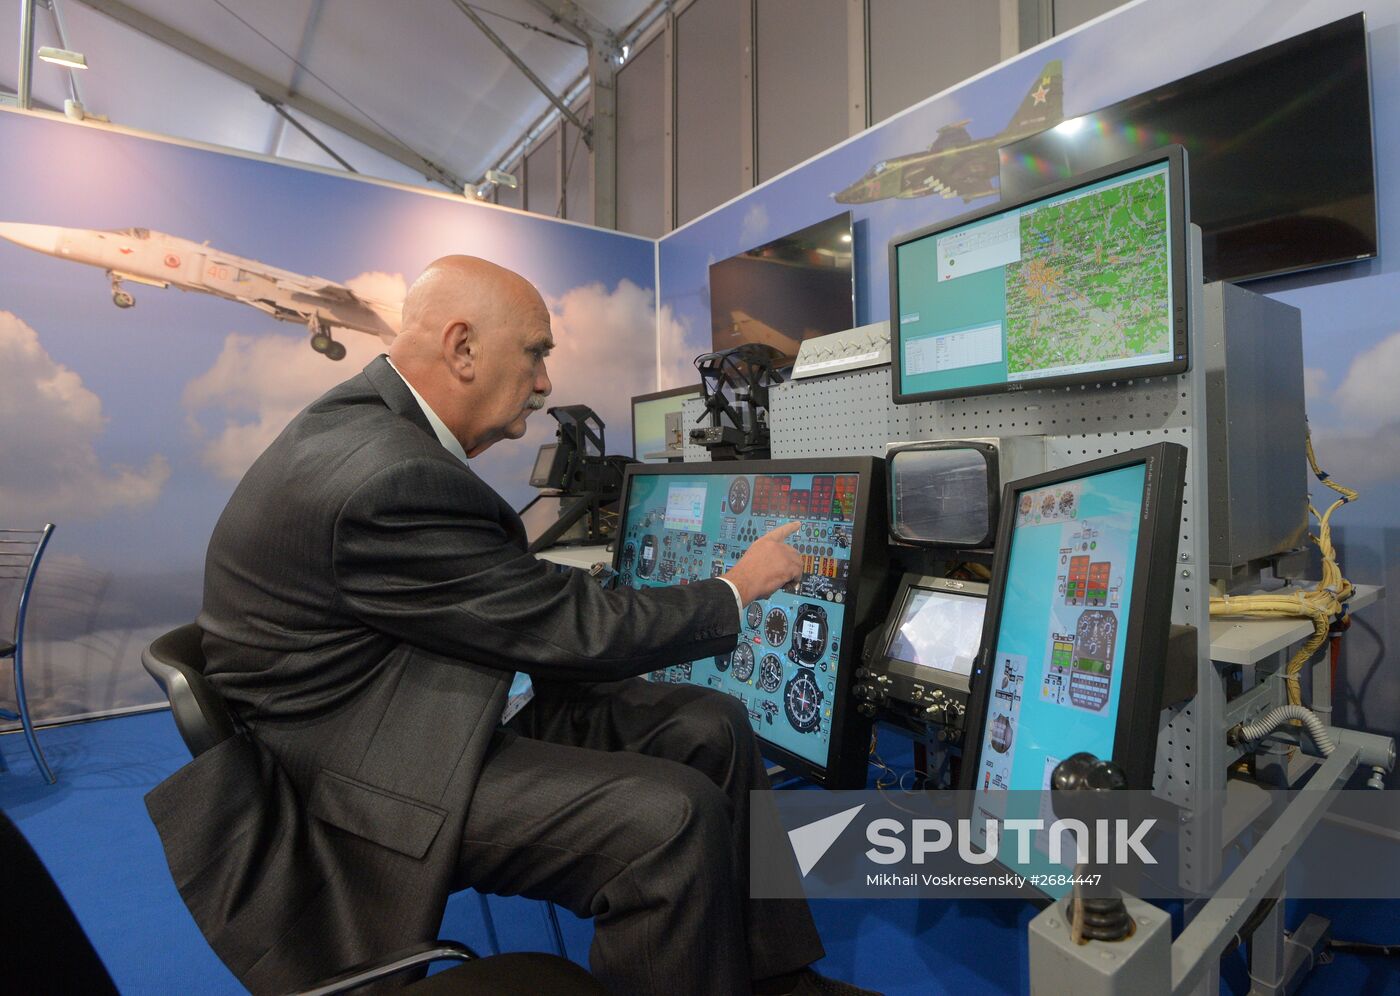 MAKS 2015 International Aviation and Space Salon opens in Zhukovsky